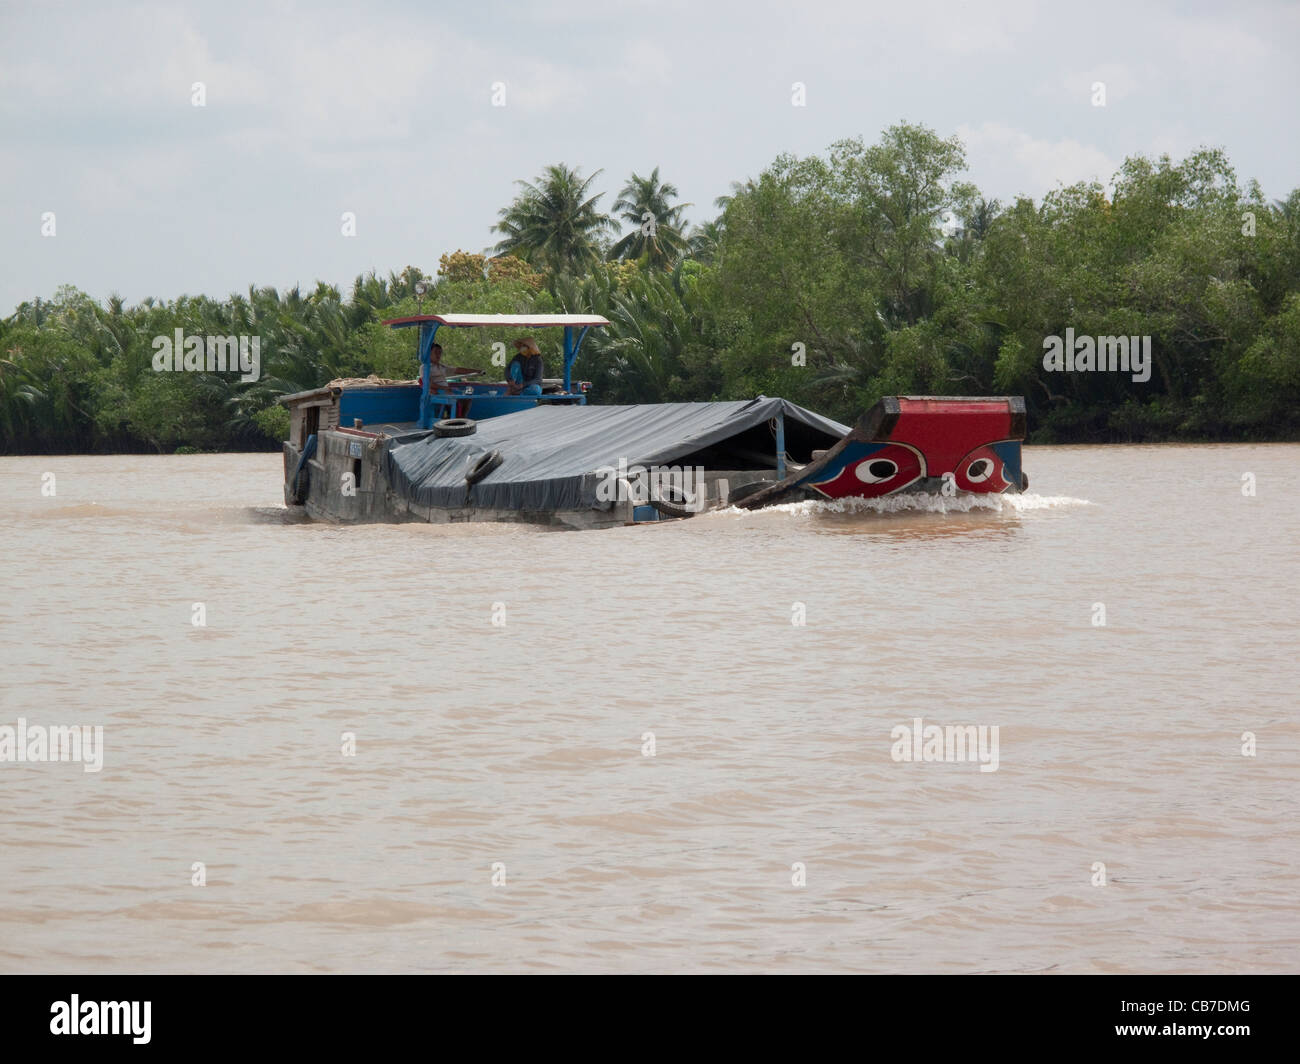 River cargo boat on the River Mekong, Mekong Delta, Vietnam Stock Photo